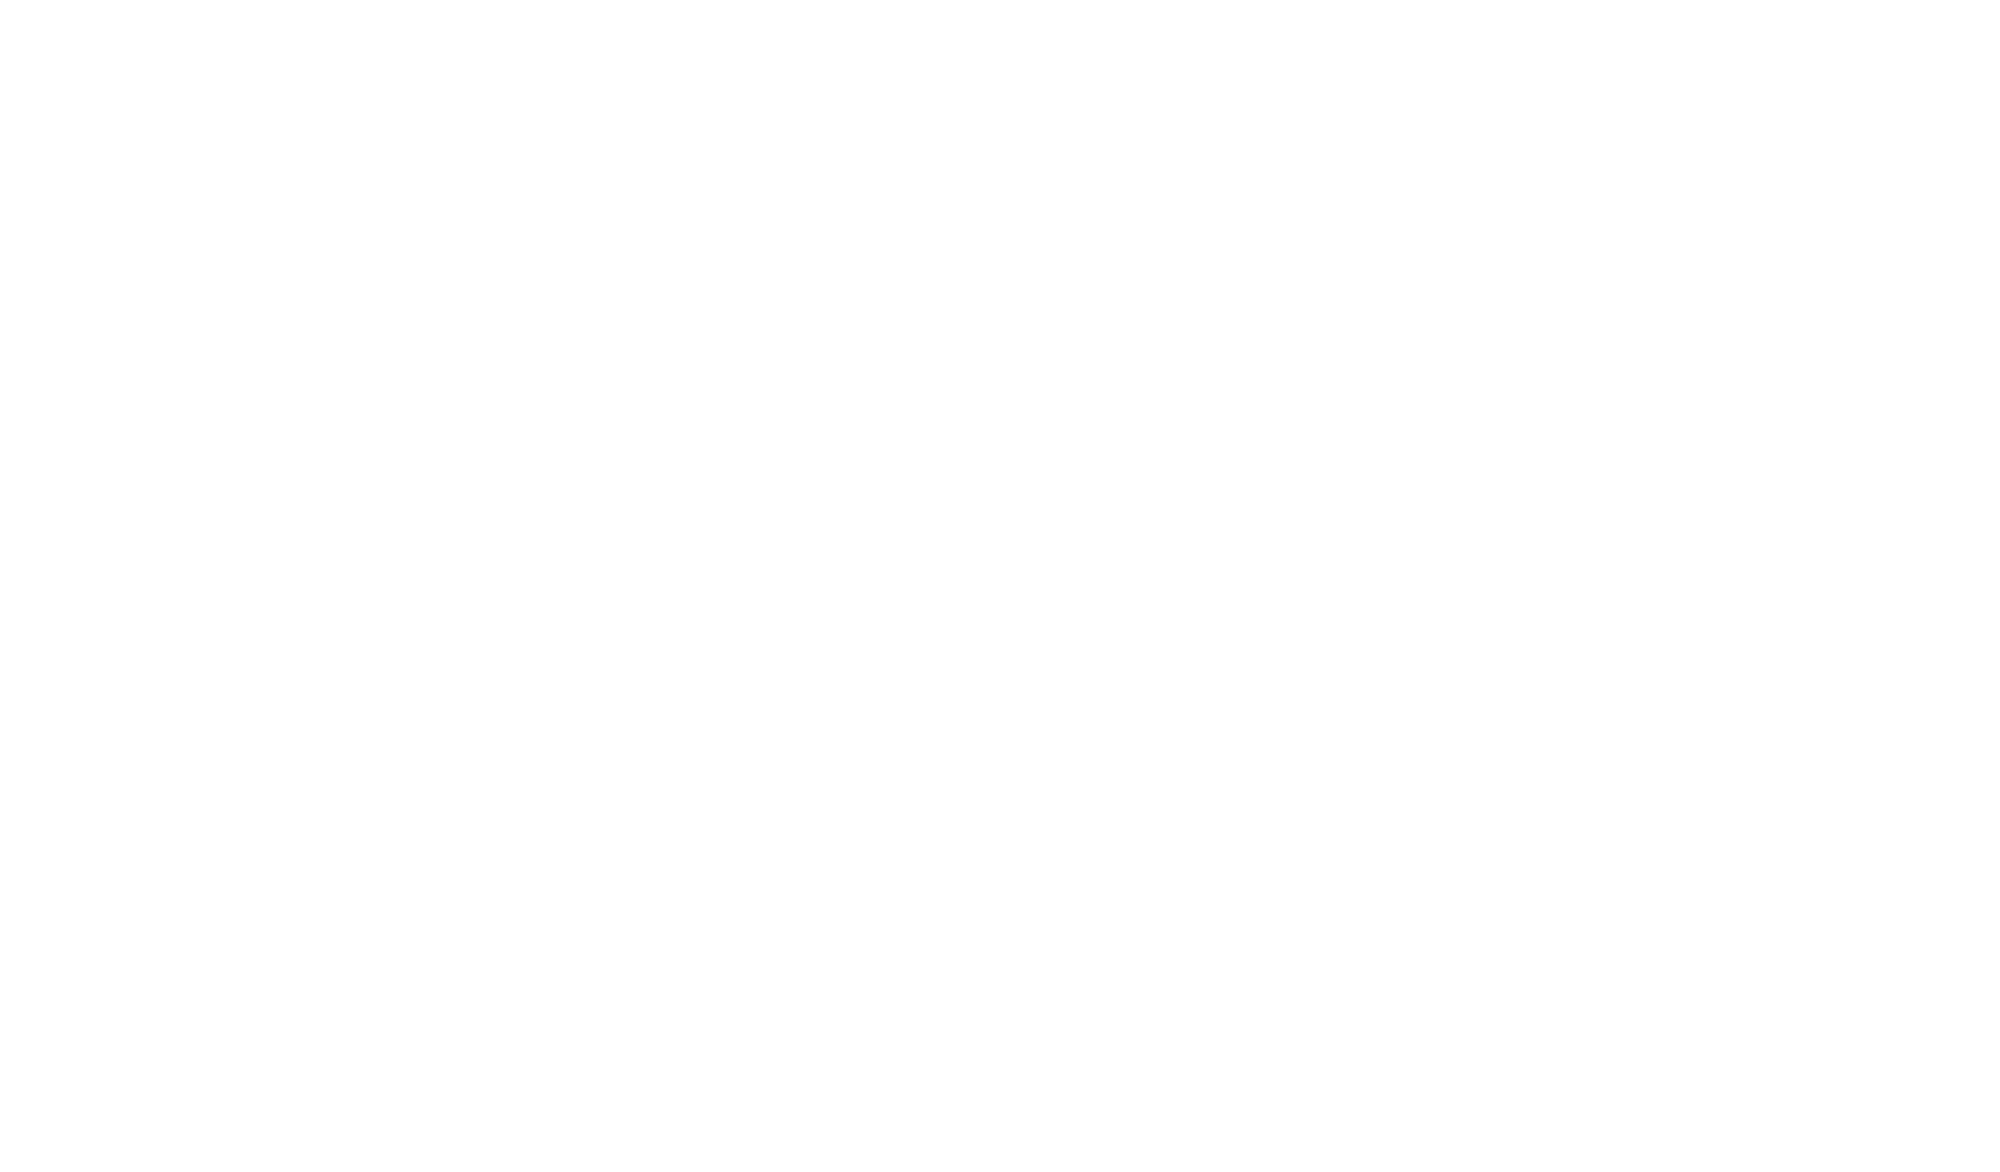 Under Armour Logo PNG Images Transparent Free Download